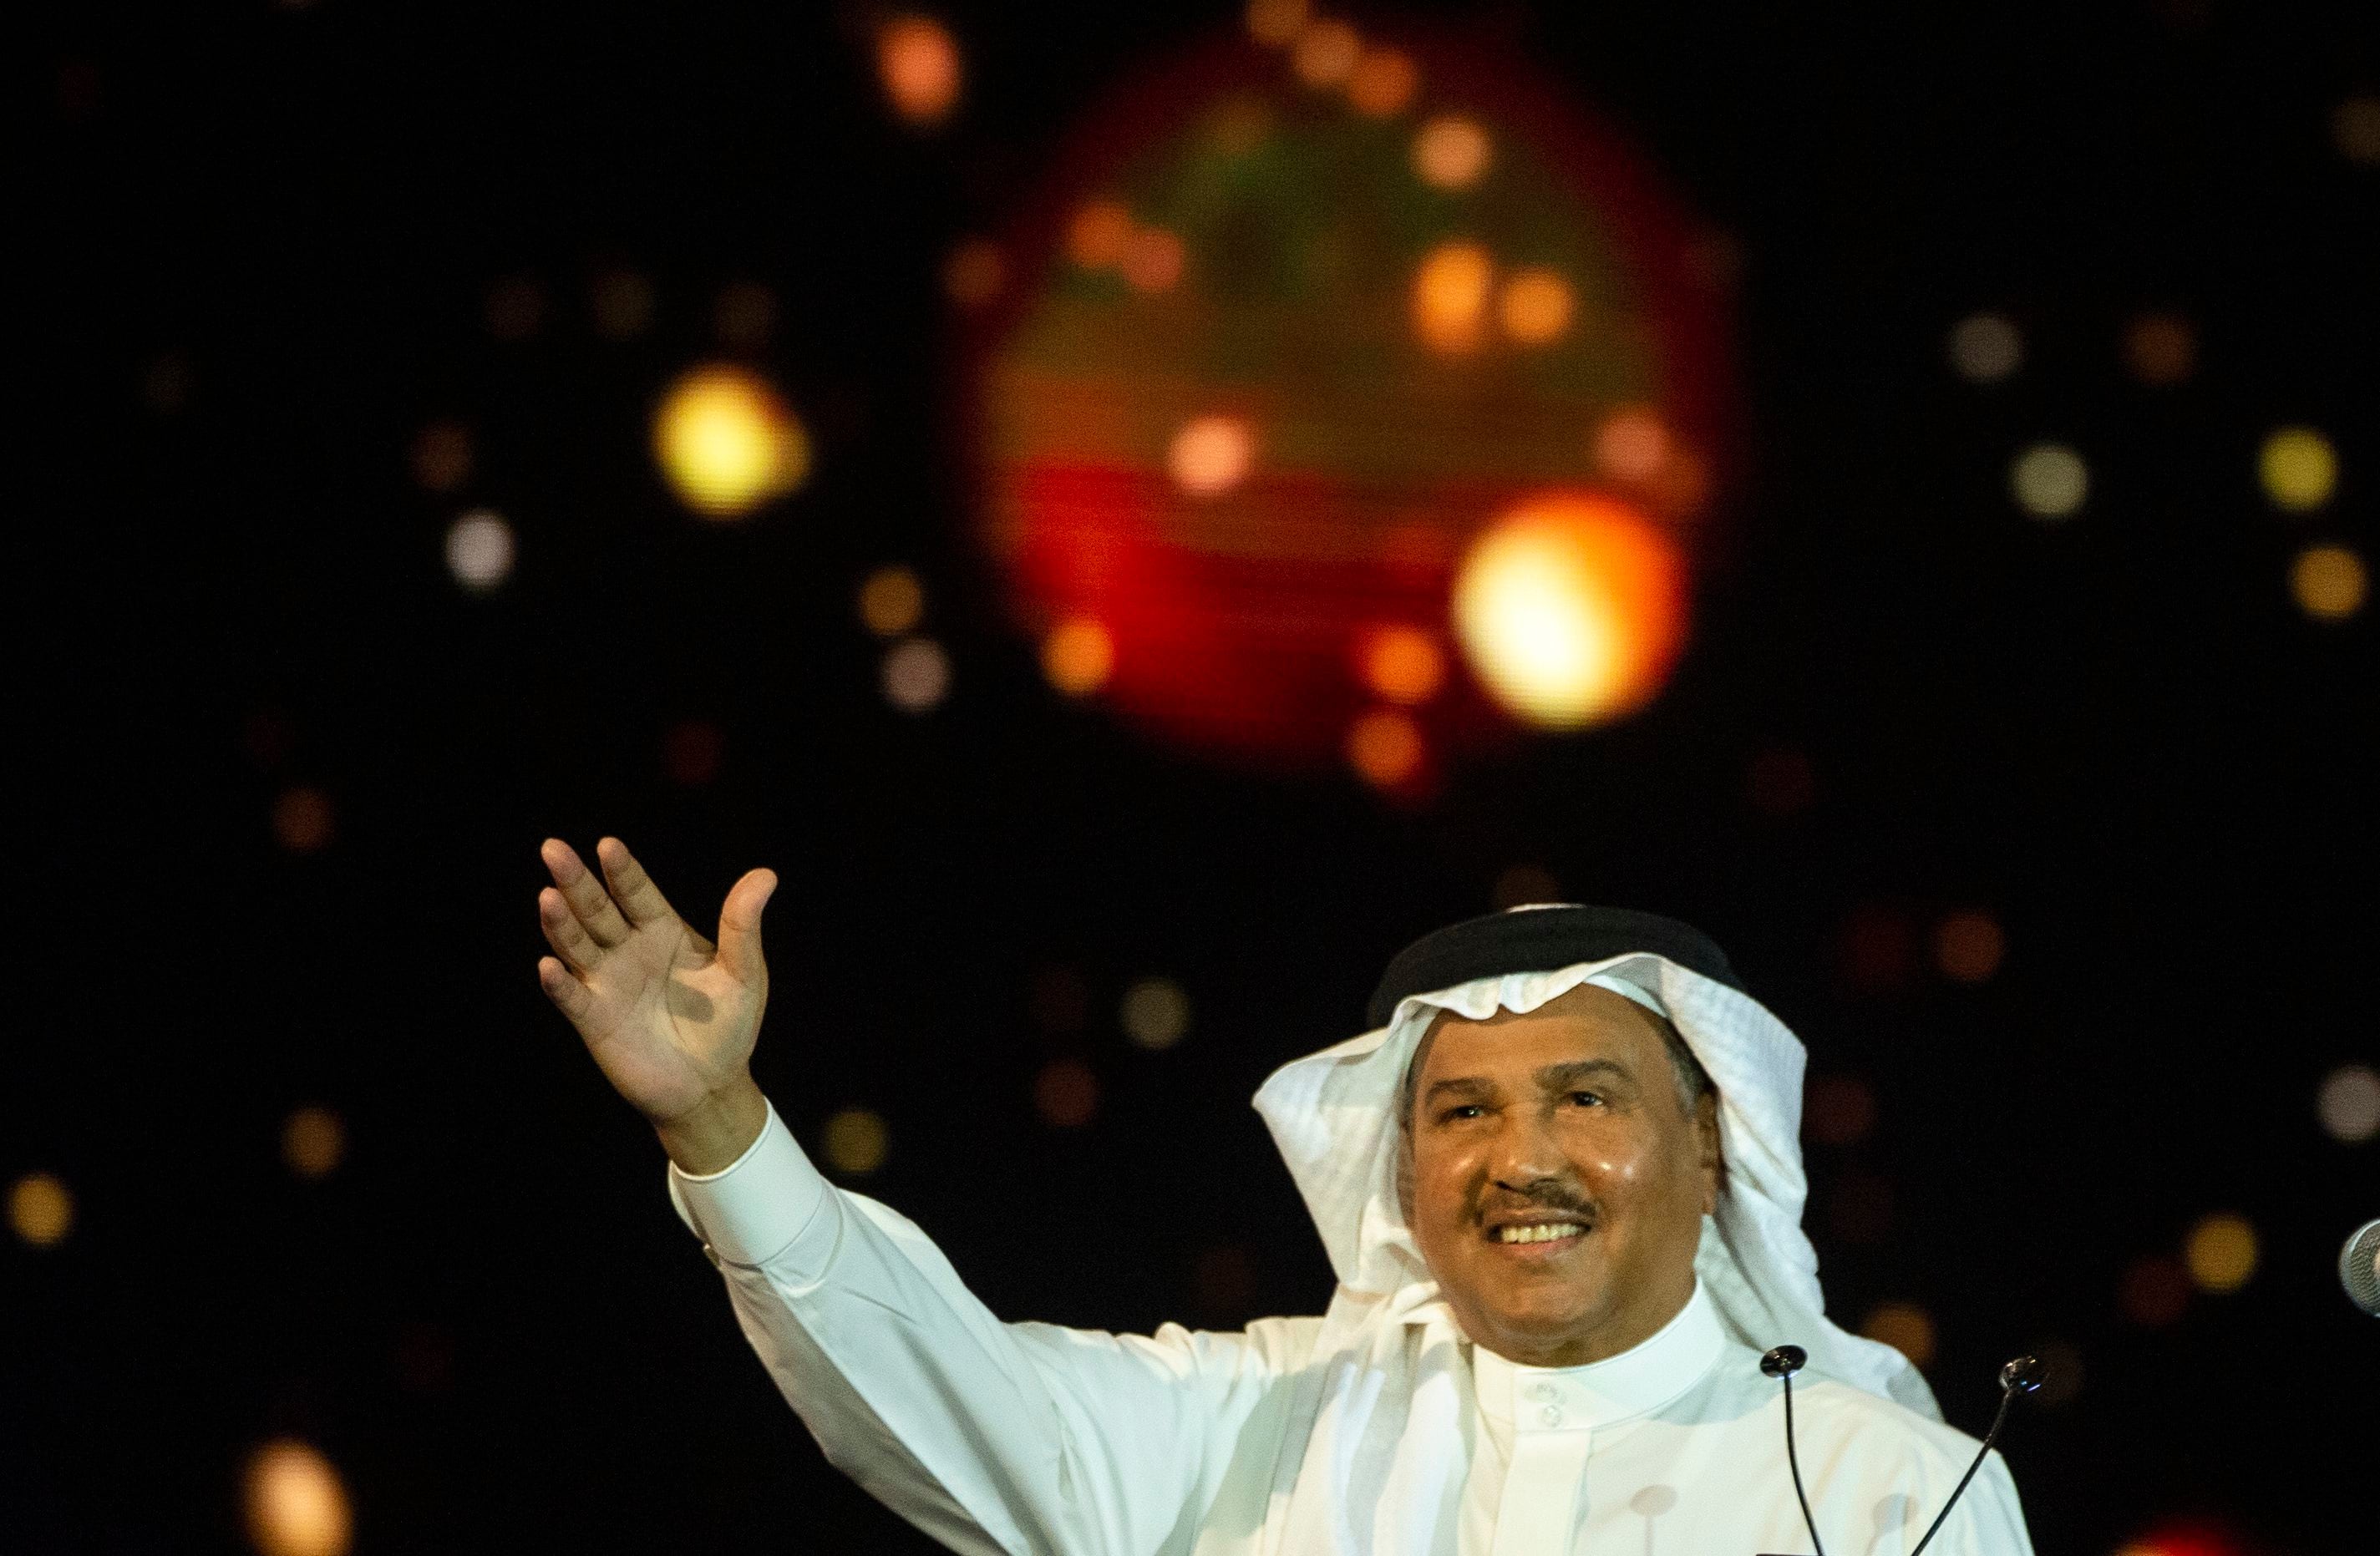 saudi music star mohammed abdu undergoing treatment for cancer